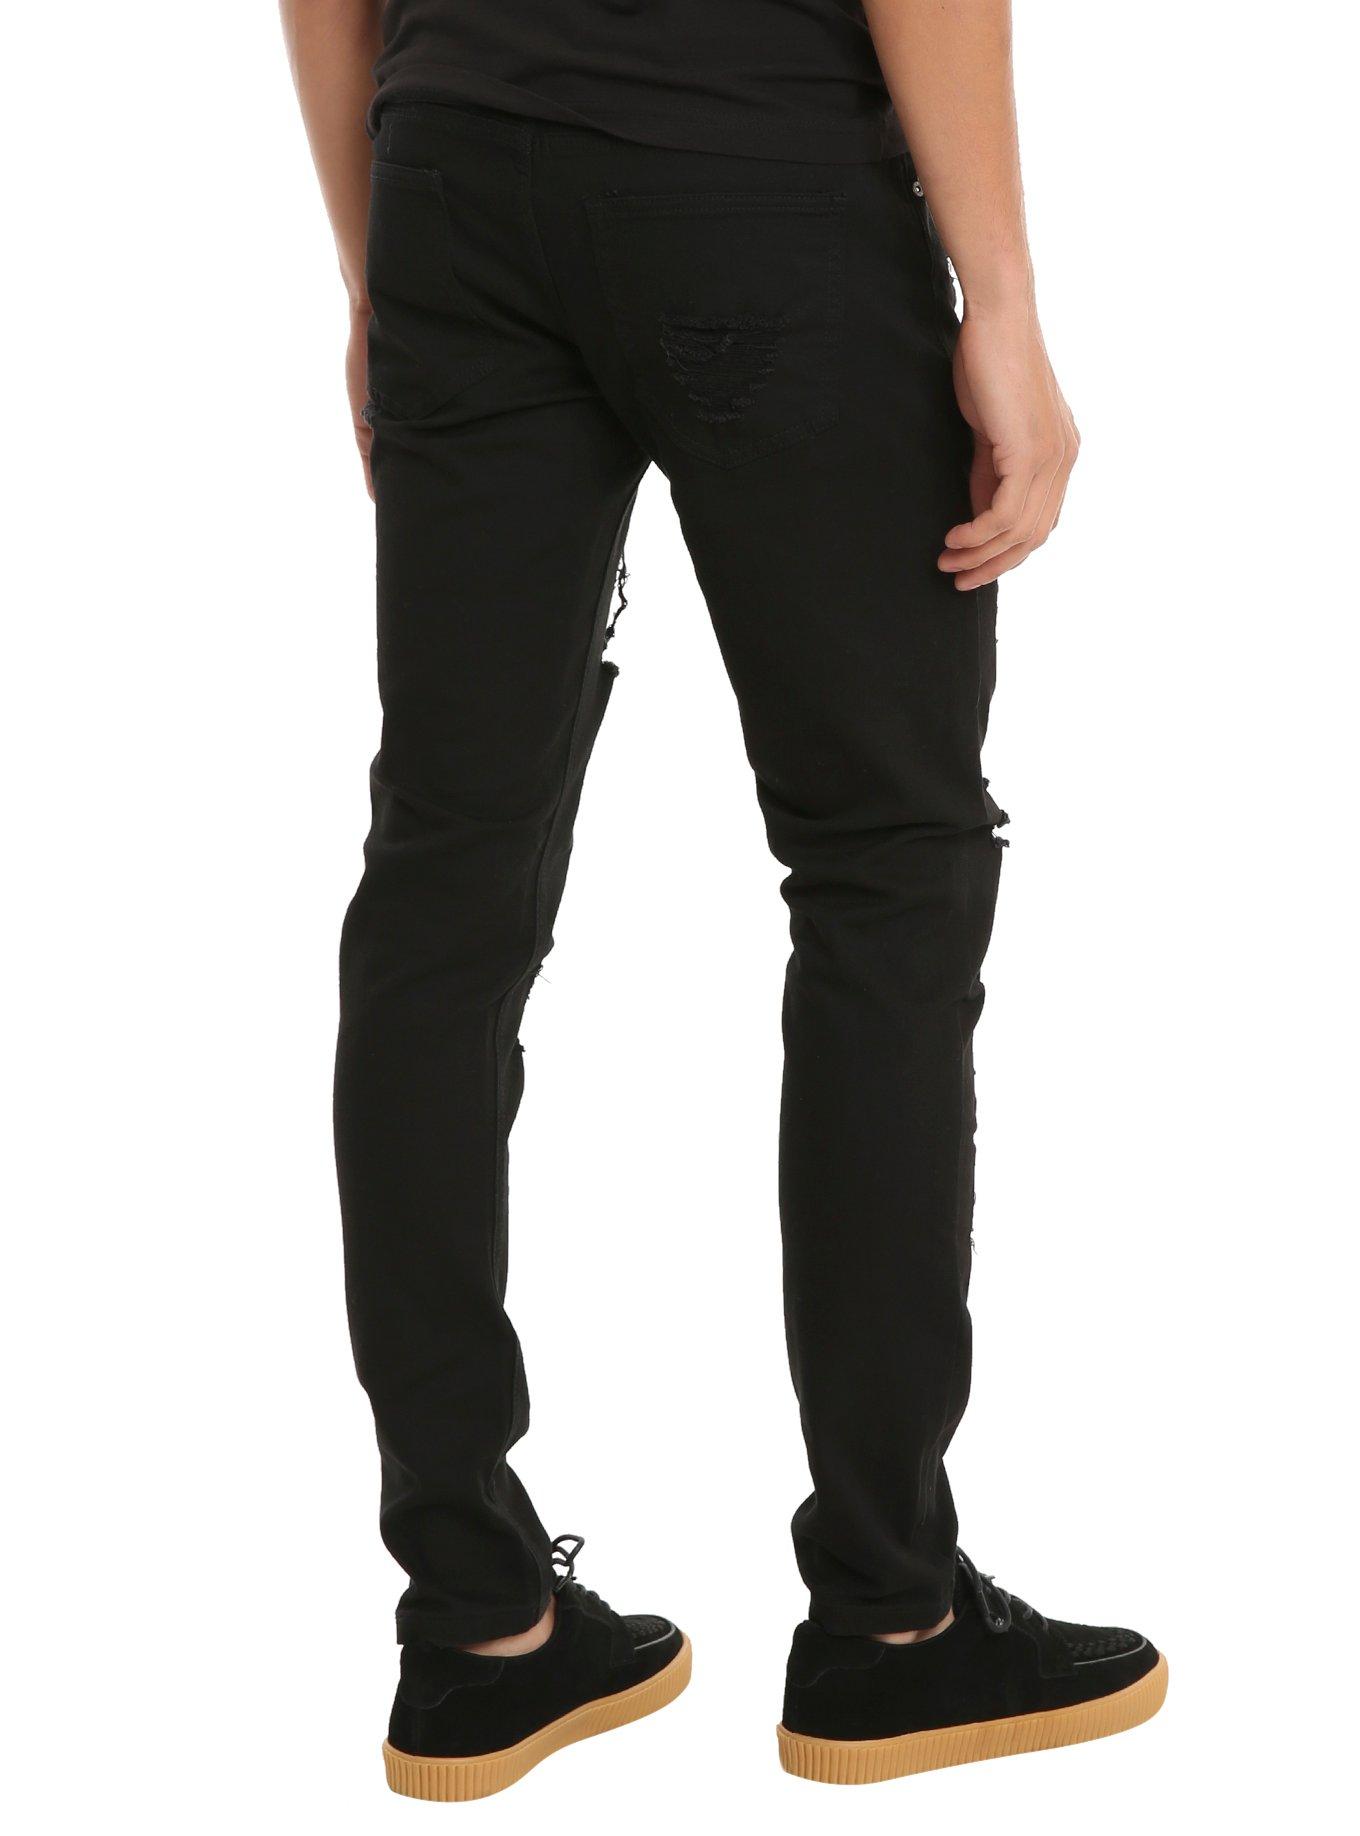 Black Zippered Skinny Jeans 32 Inch Inseam, , alternate